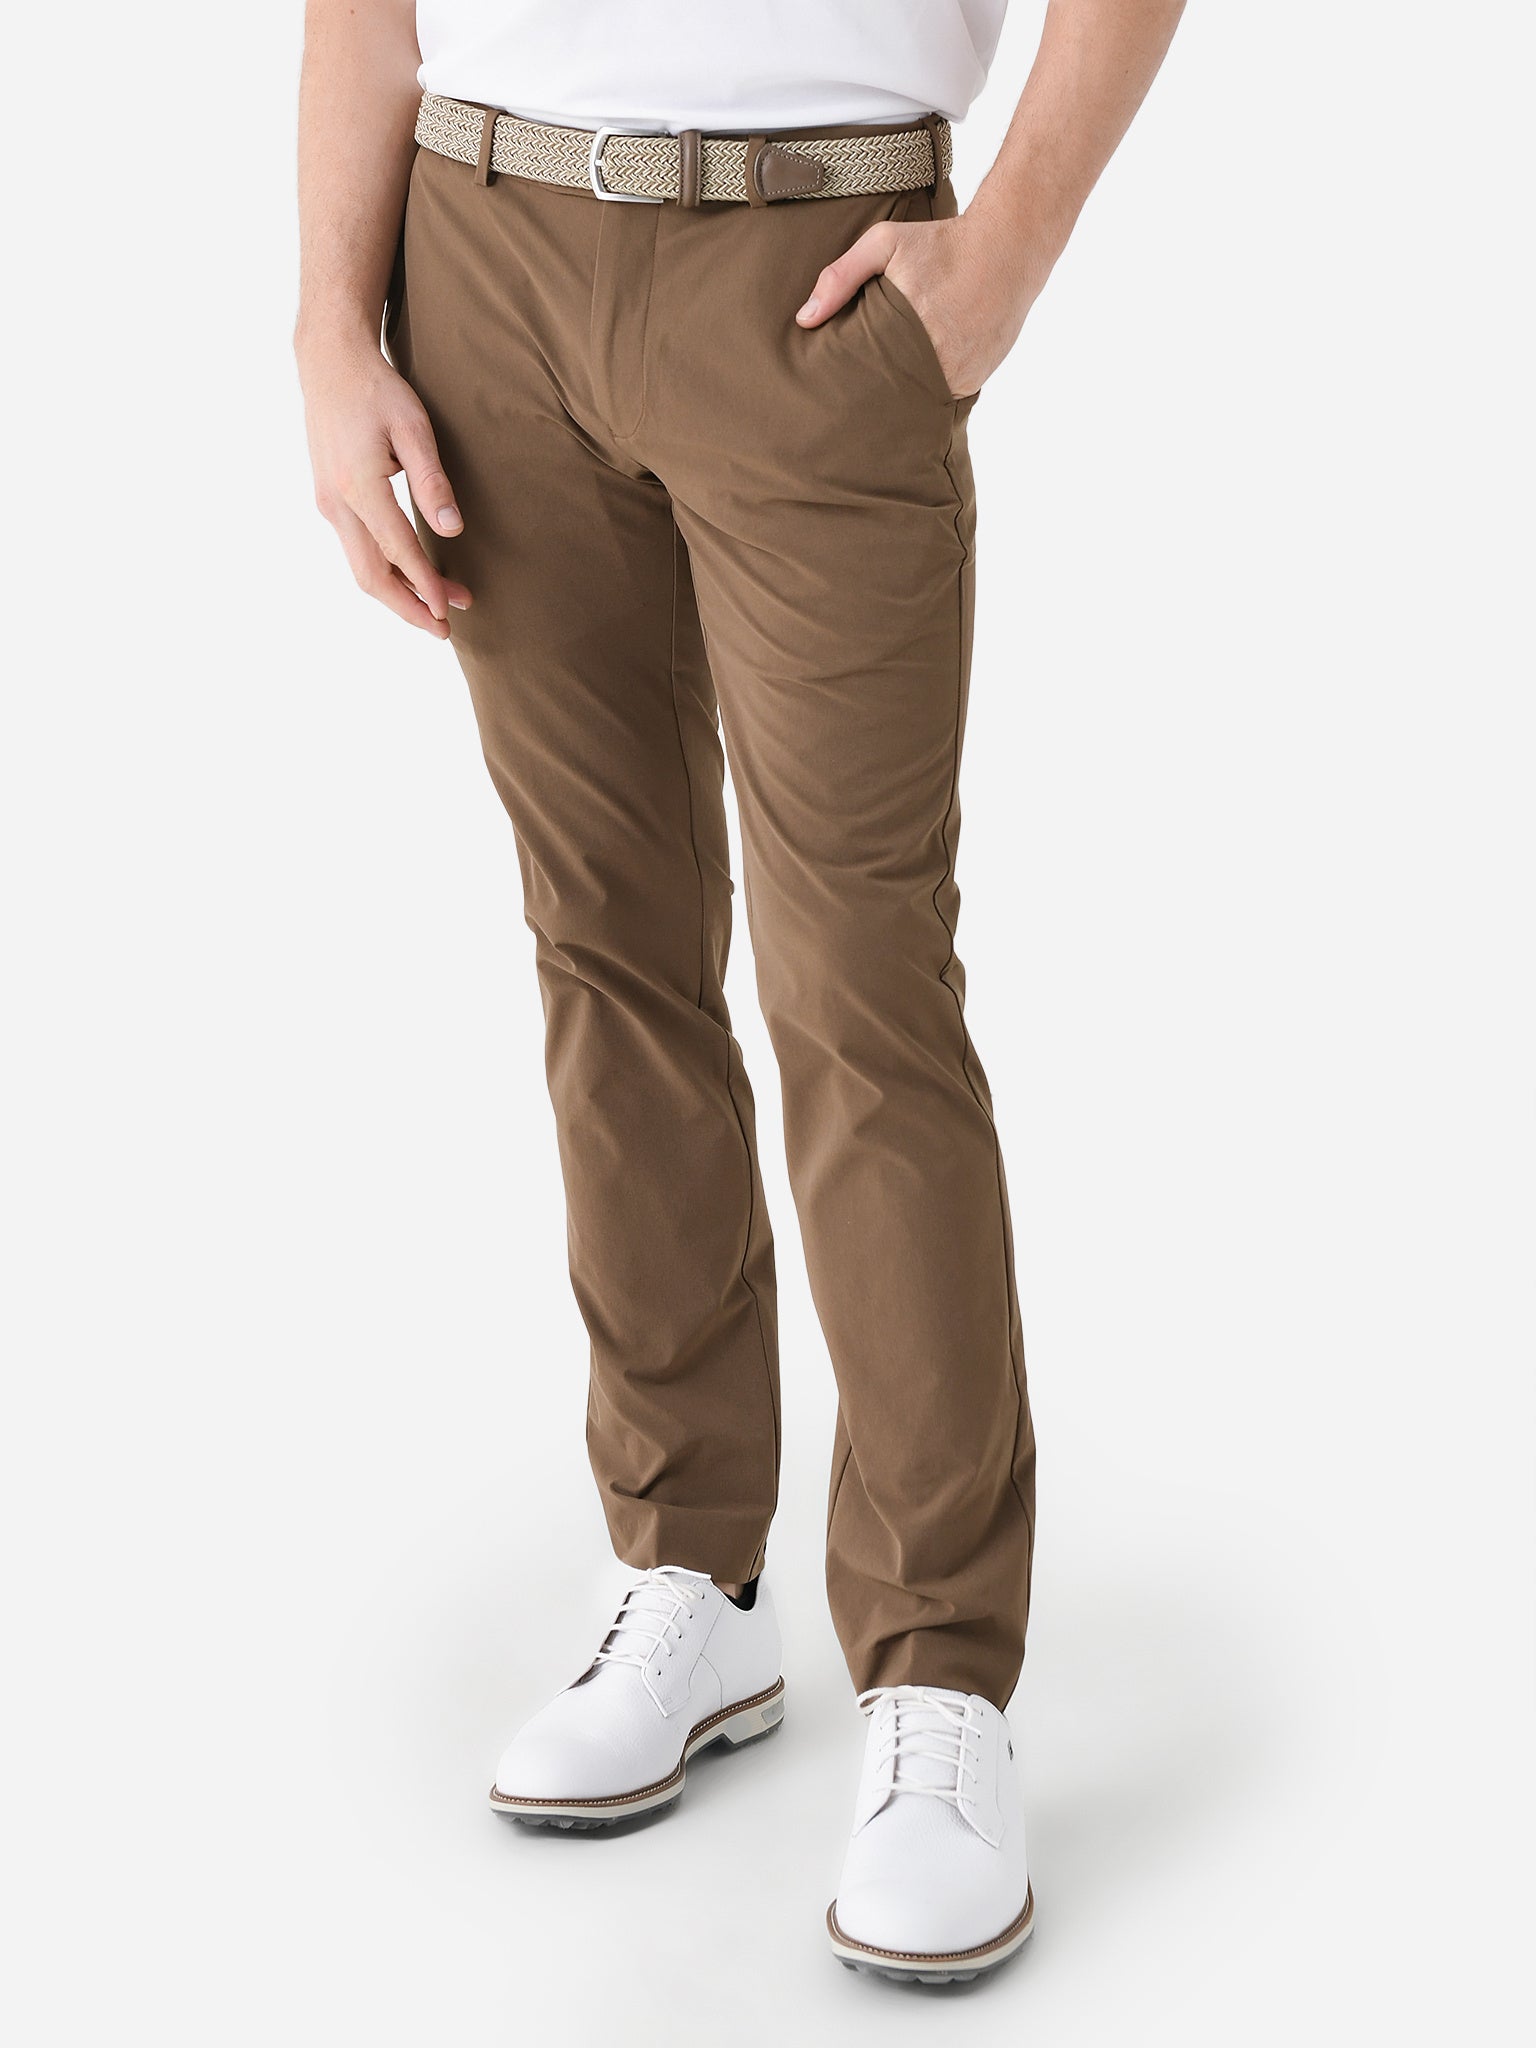 Peter Millar Light Tan 5 Pocket Cotton Golf Pants Size 32 Inseam 28